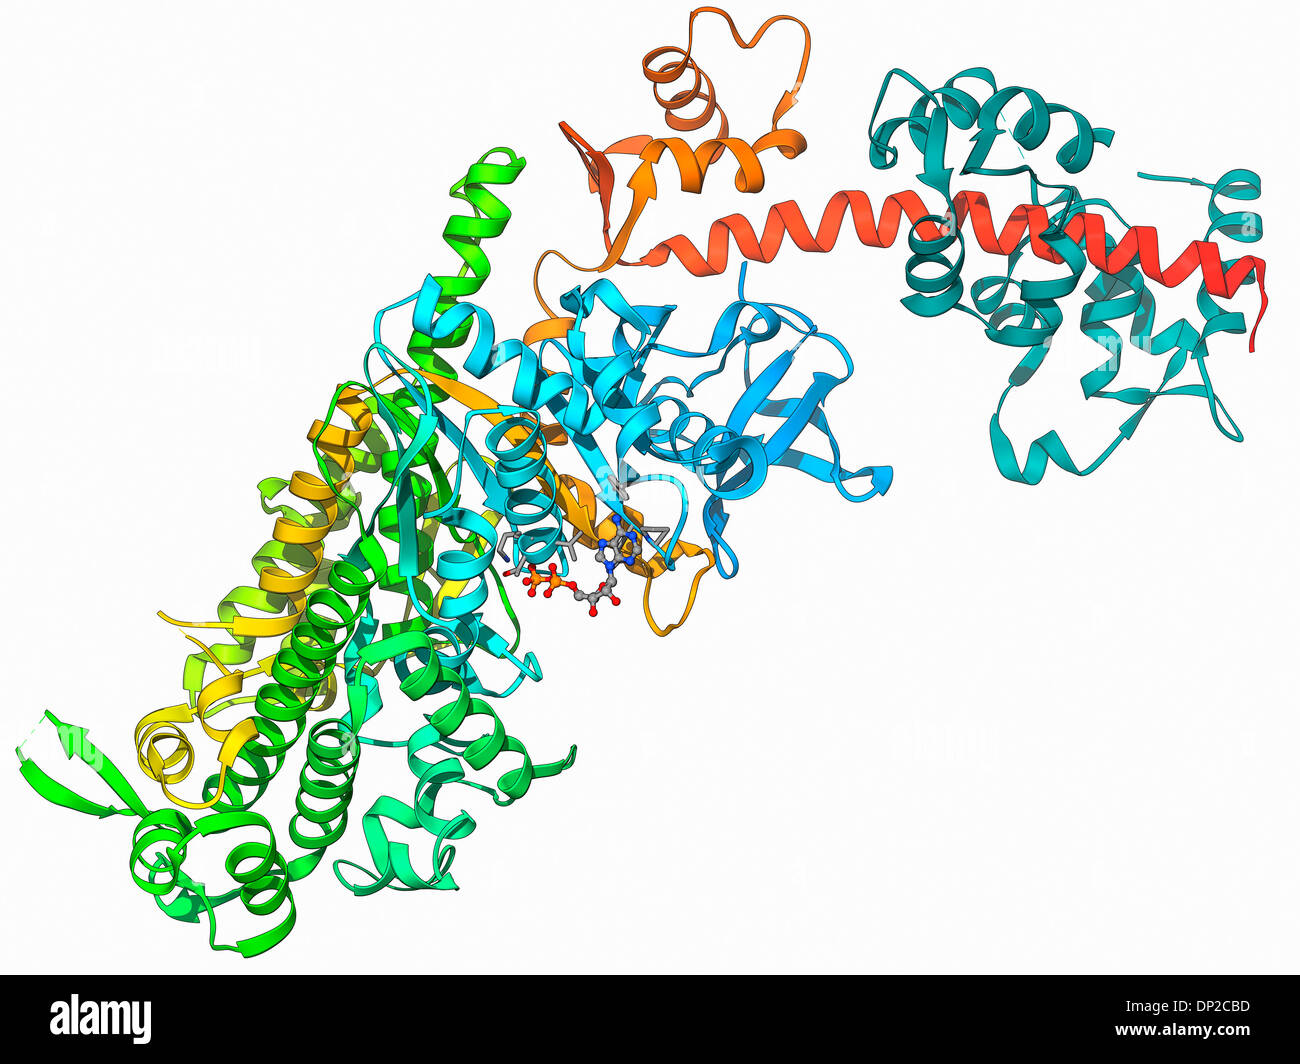 Molekulare motor protein Stockfoto